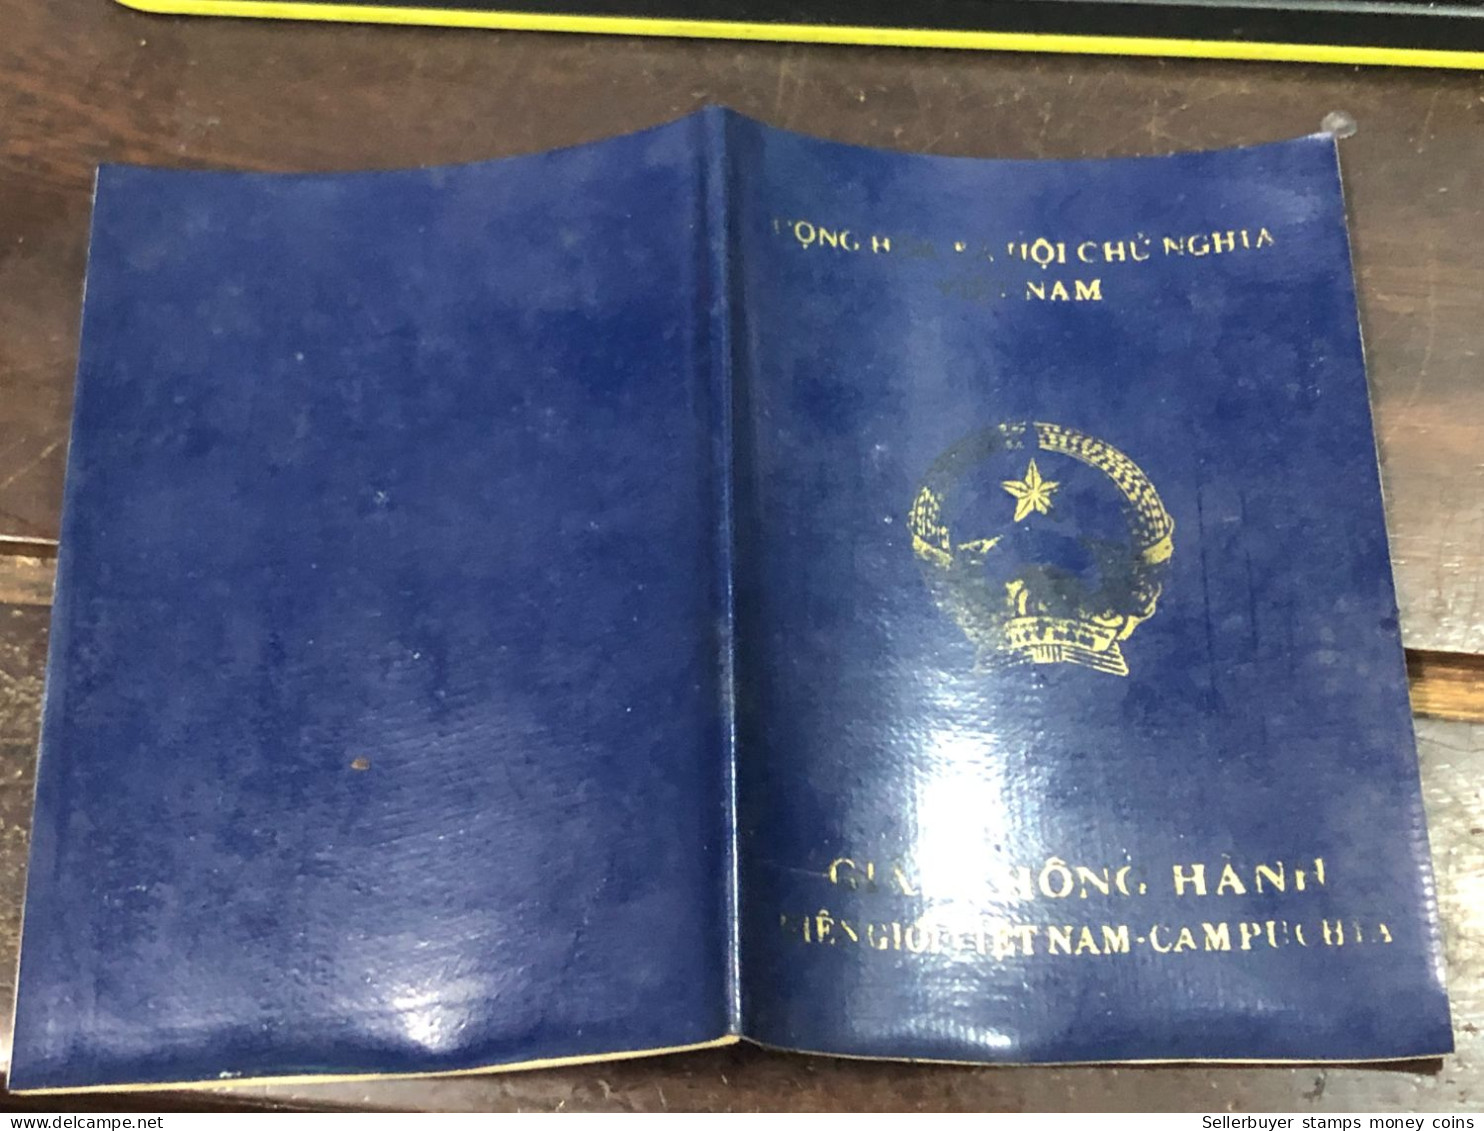 VIET NAM -OLD-GIAY THONG HANHID PASSPORT-name-TRIEU LAI CHANH-1995-1pcs Book - Colecciones